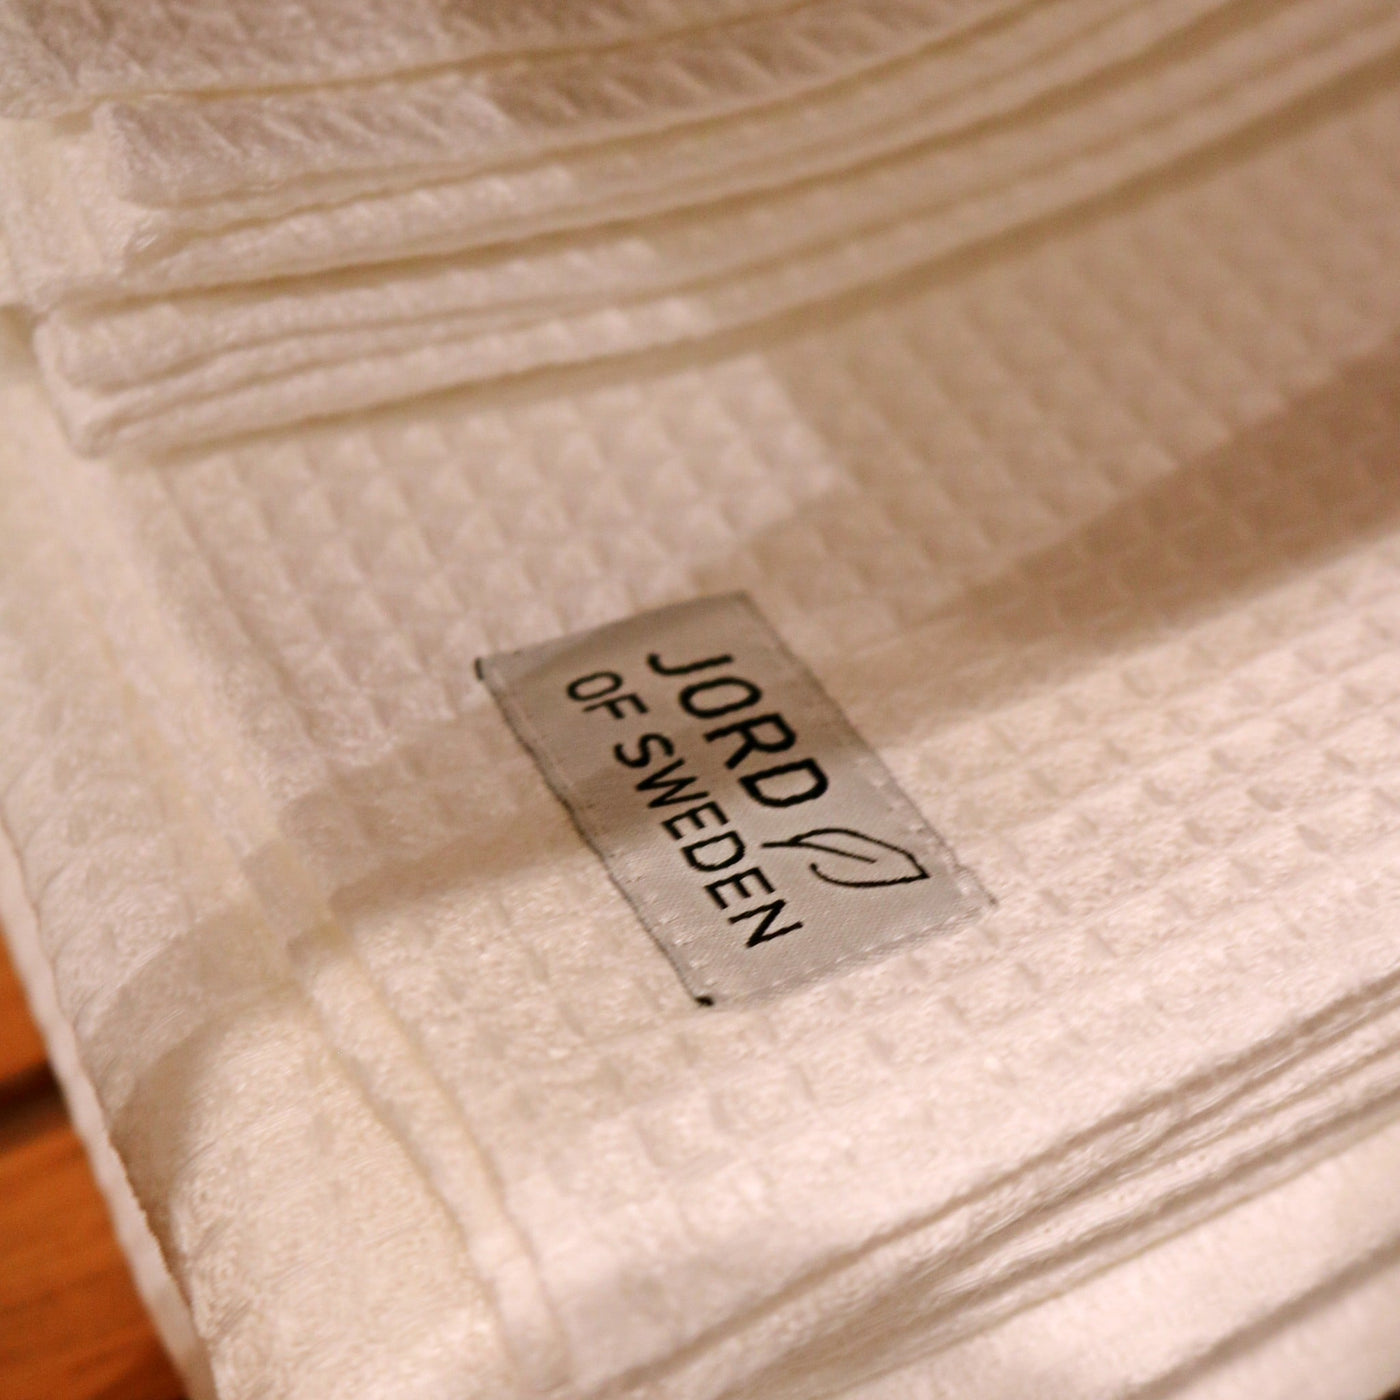 White linen bath towel